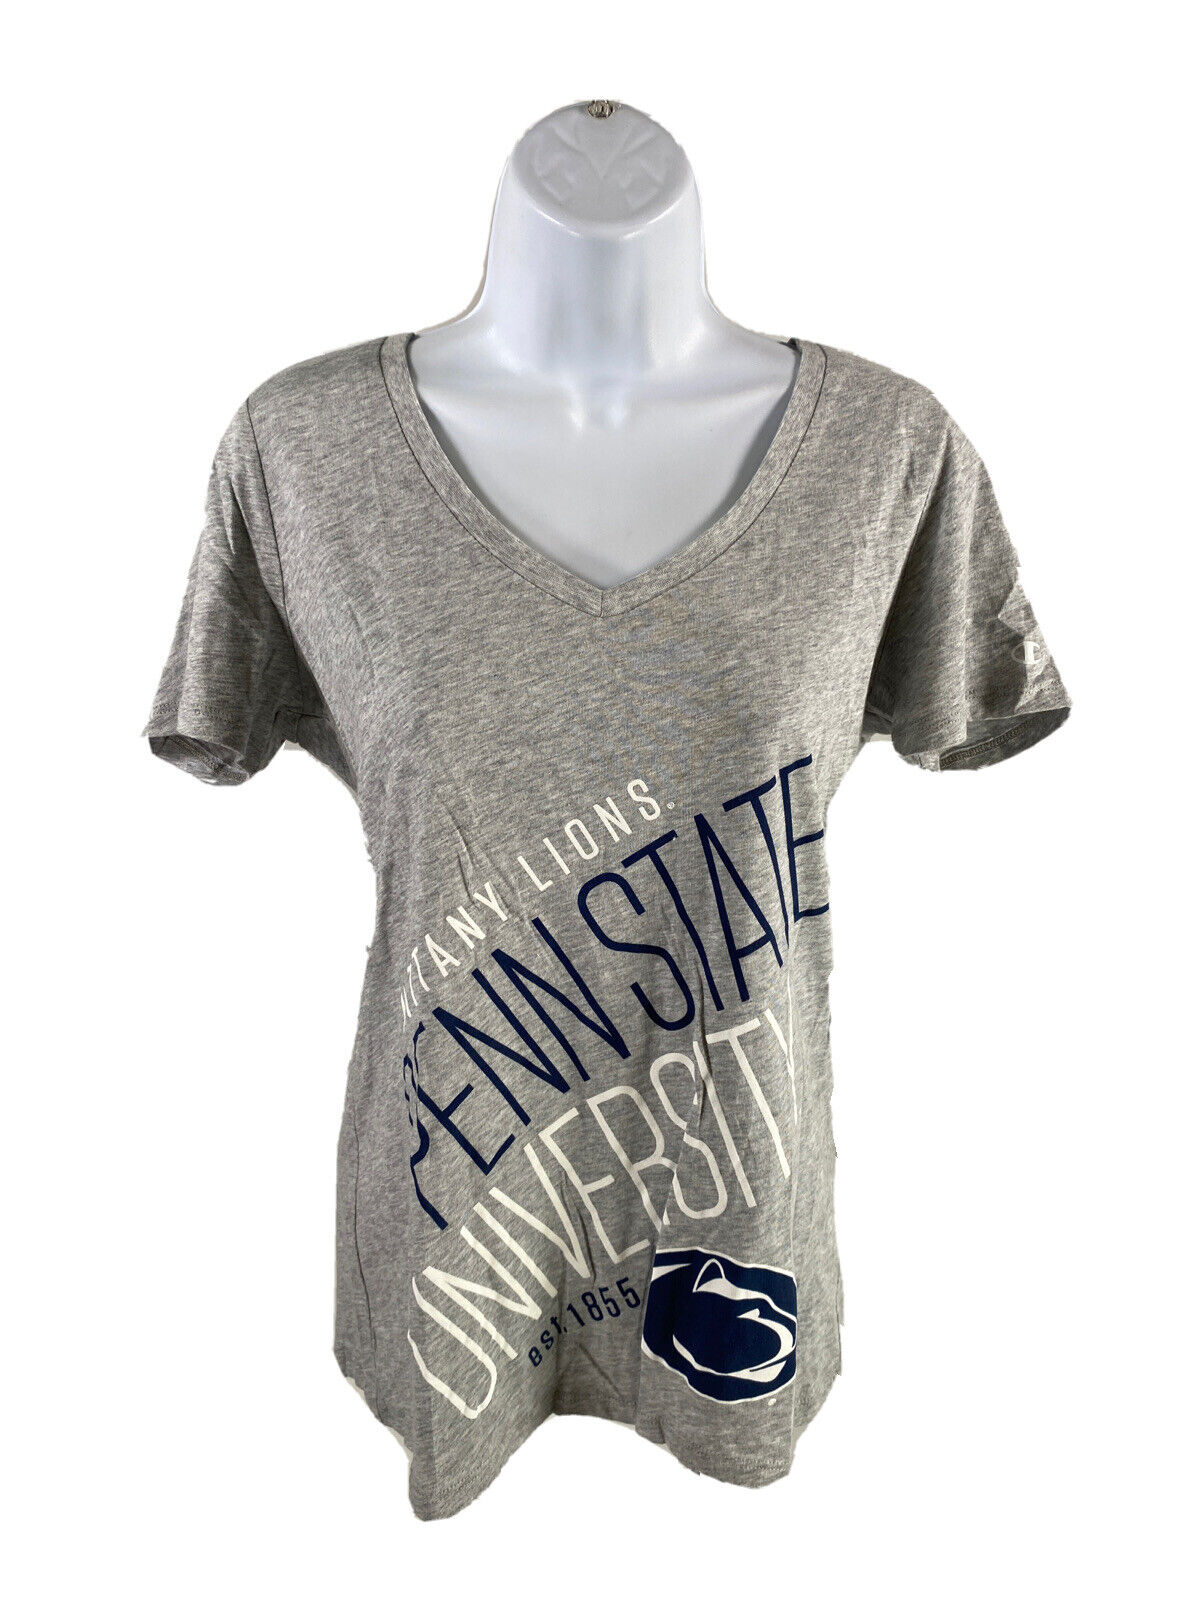 NEW Champion Women's Gray Penn State University Short Sleeve T-Shirt - M